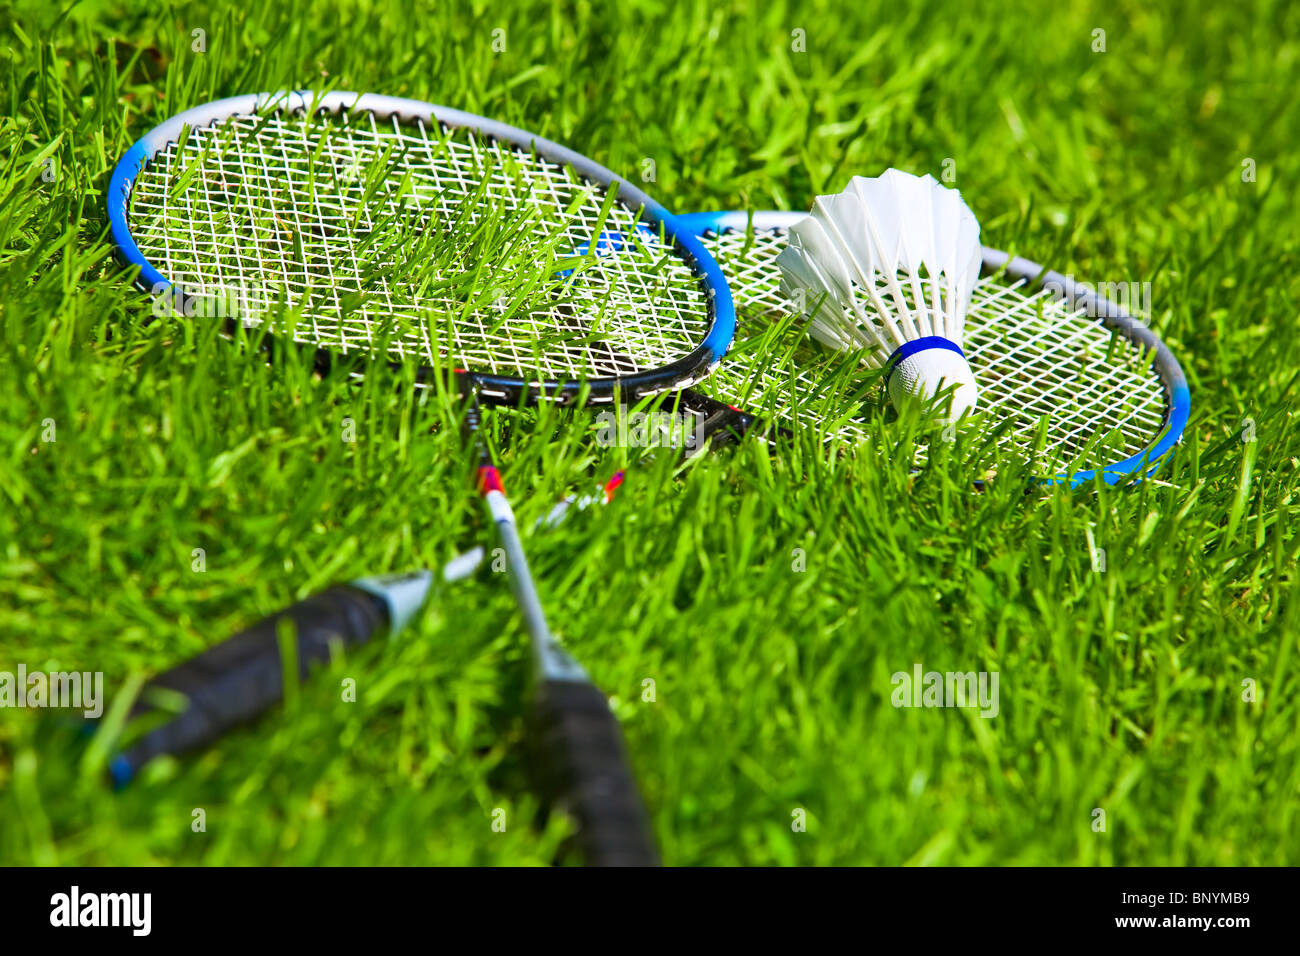 Badminton rackets on green grass. Stock Photo